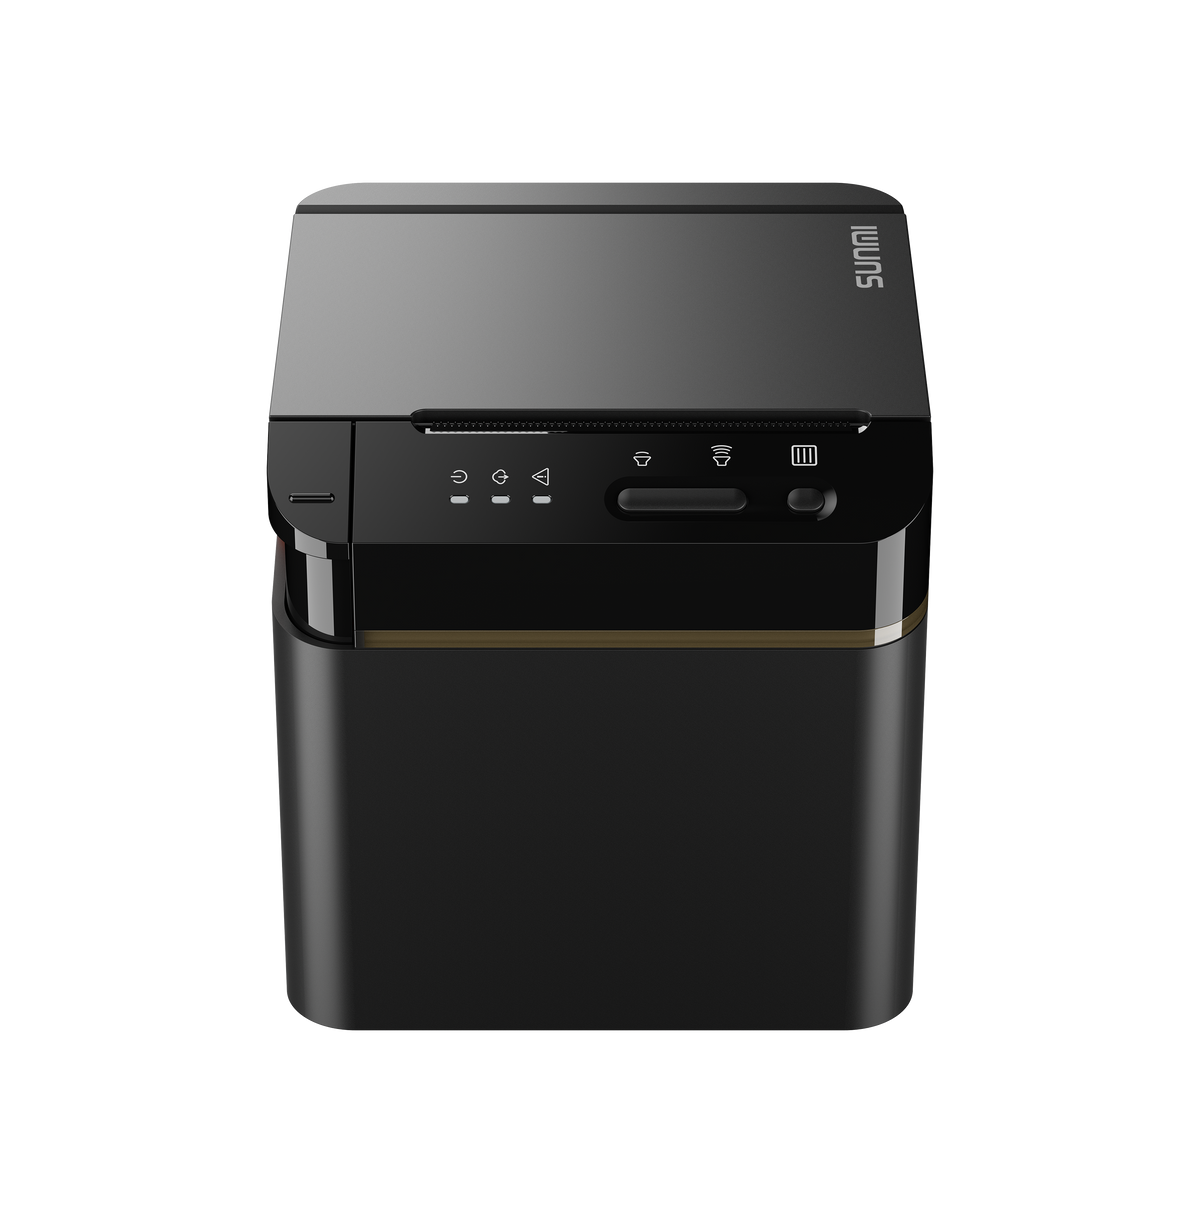 SUNMI 80mm Kitchen Cloud Printer